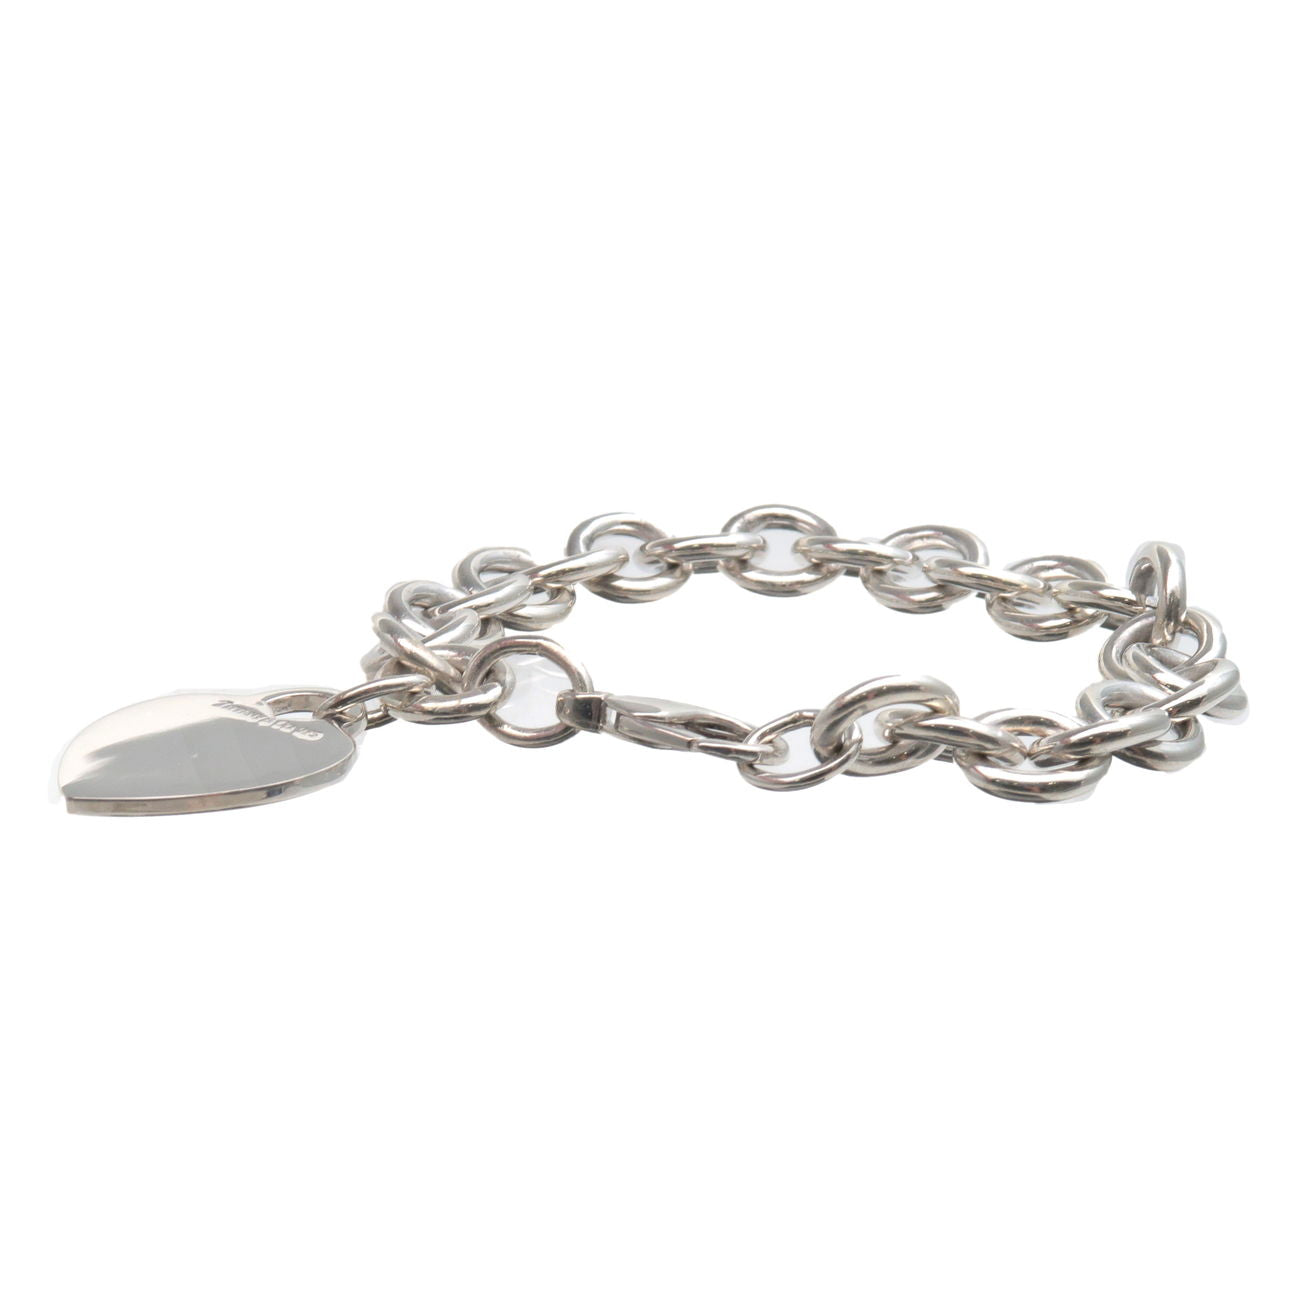 Tiffany&Co. Return To Tiffany Heart Tag Bracelet Silver 925